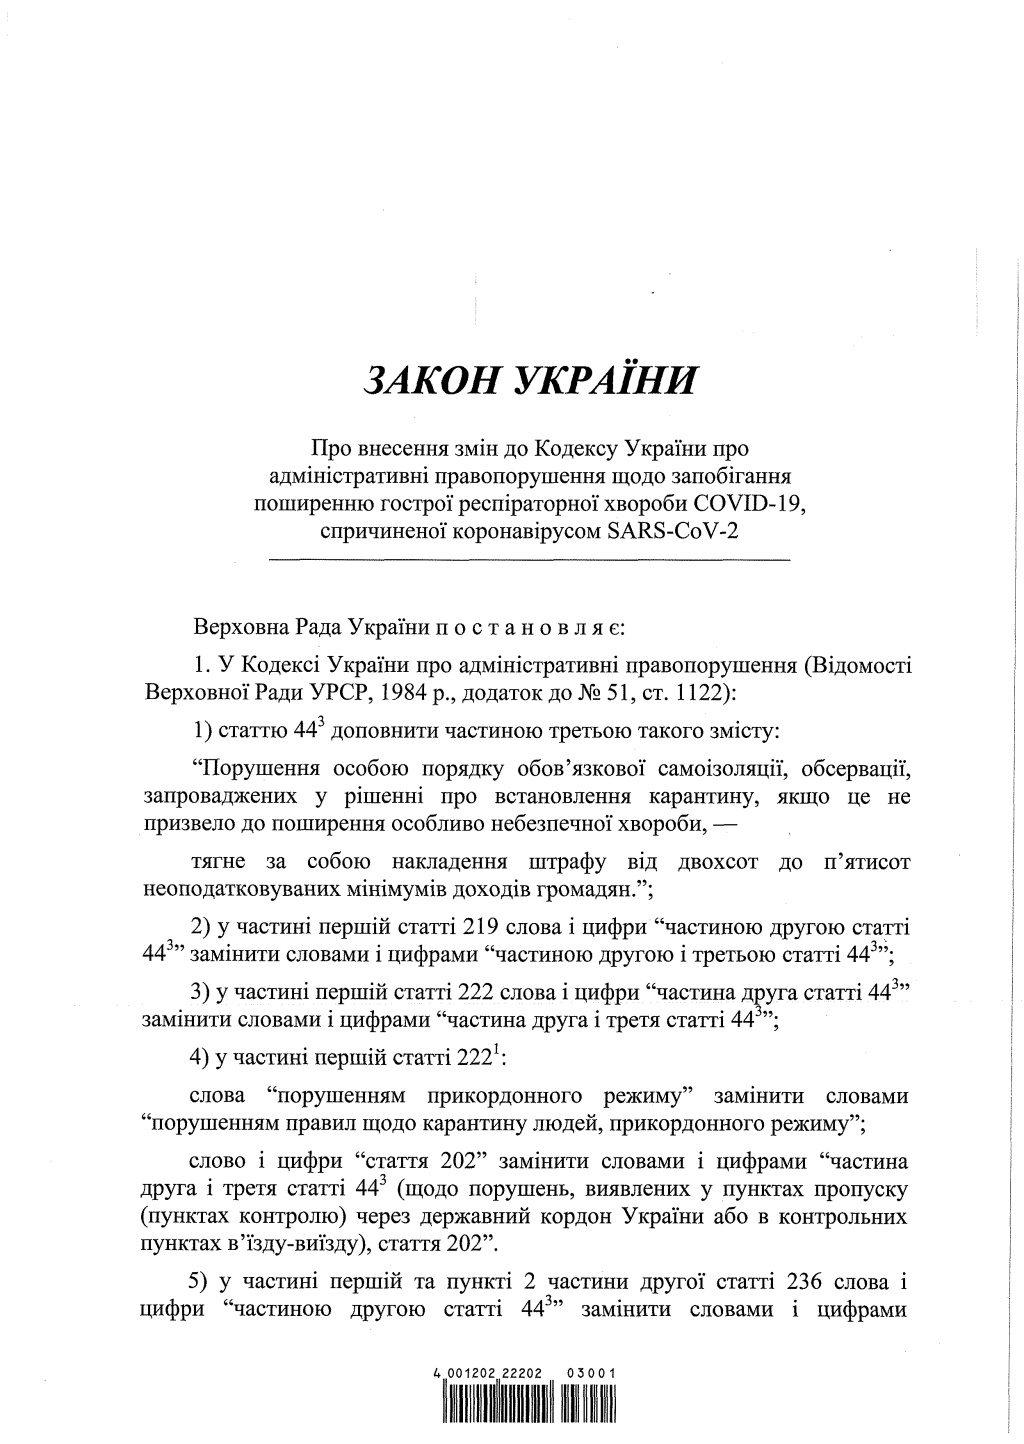 Кабмин предлагает ввести штрафы до 8500 тысяч гривен за нарушение самоизоляции во время карантина - фото 2